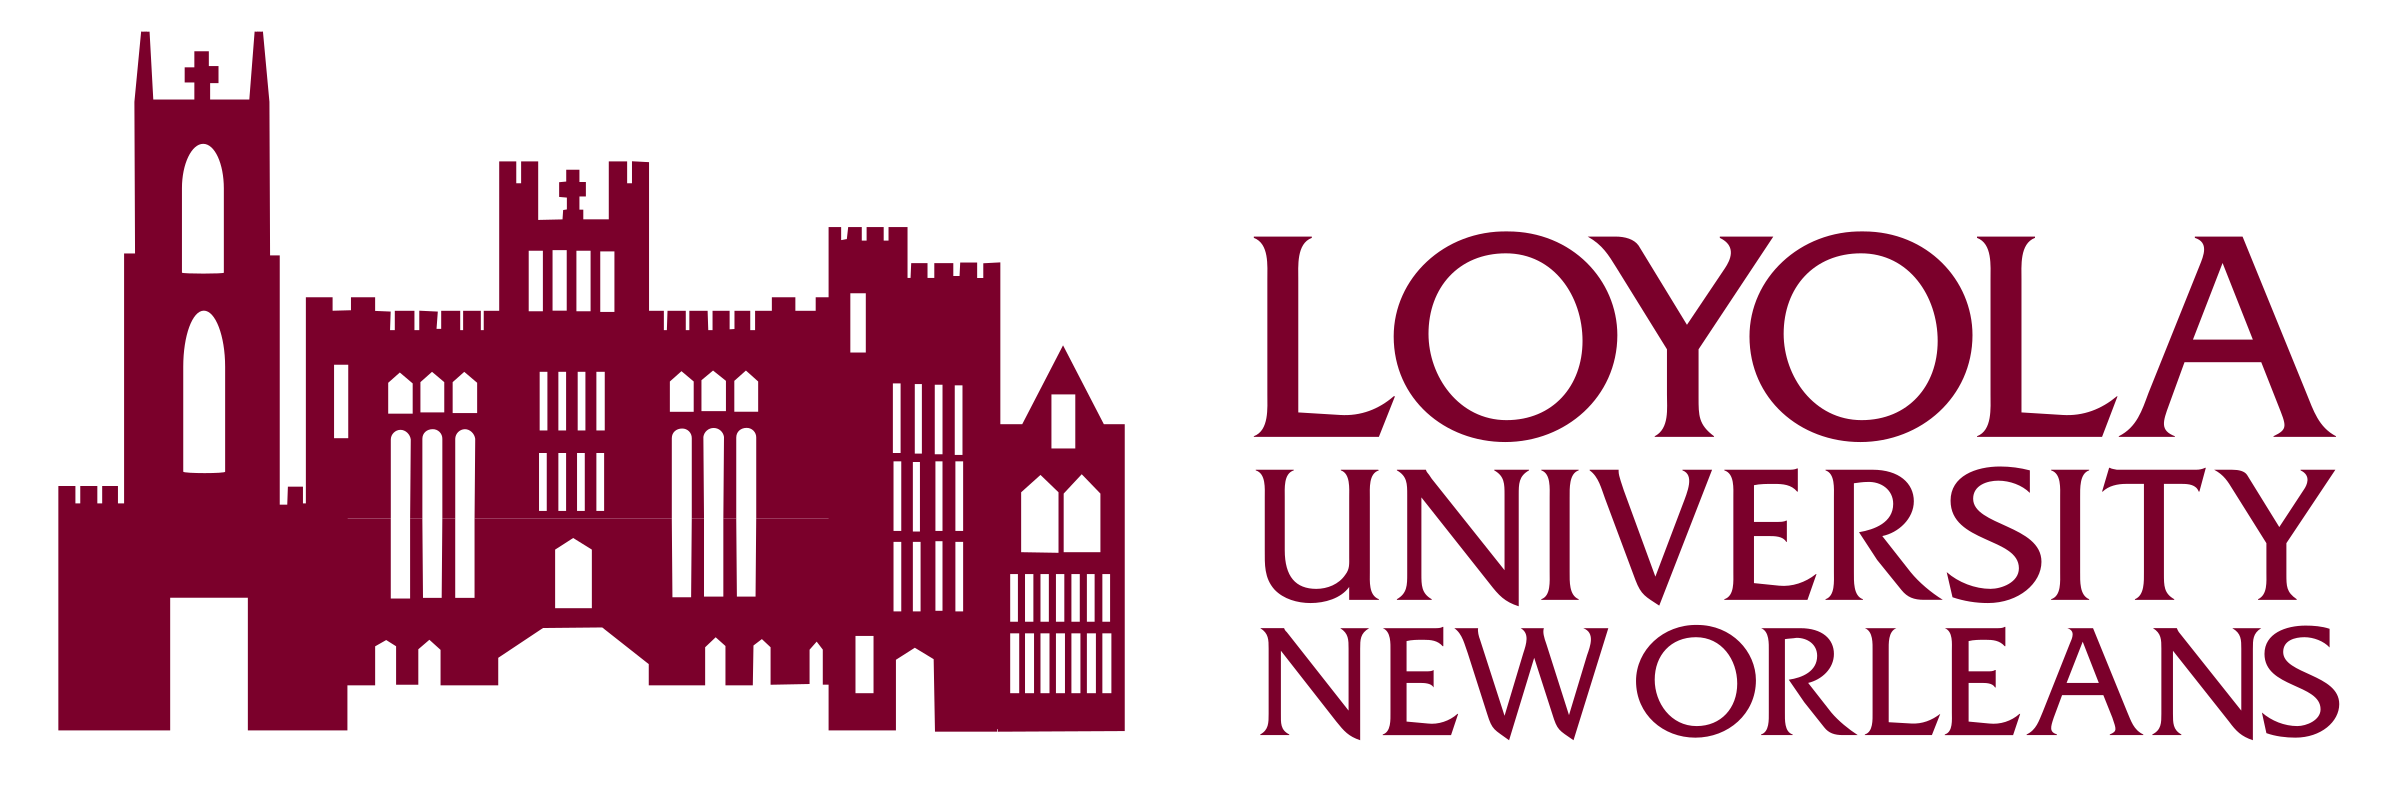 loyola-university-new-orleans-logo-png-transparent.png